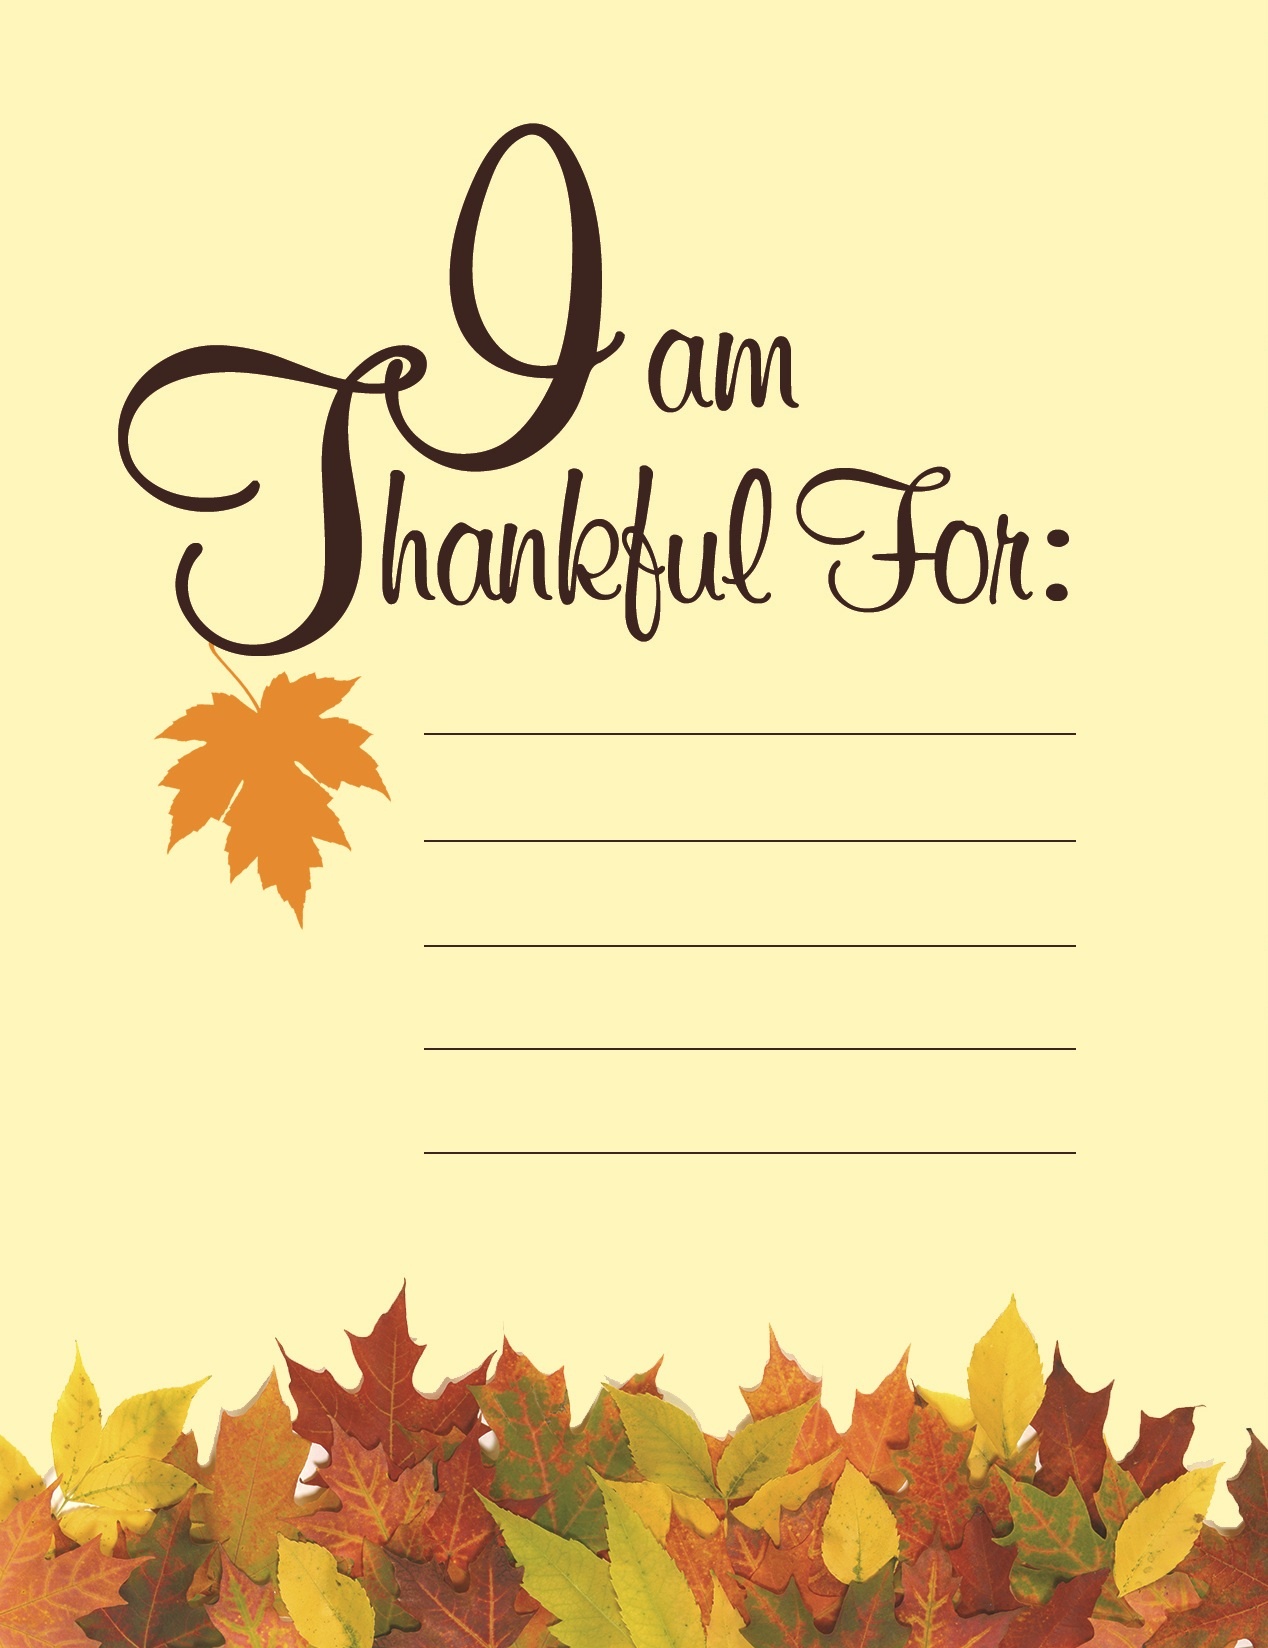 Gratitude This Thanksgiving | American Greetings Blog - Happy Thanksgiving Cards Free Printable